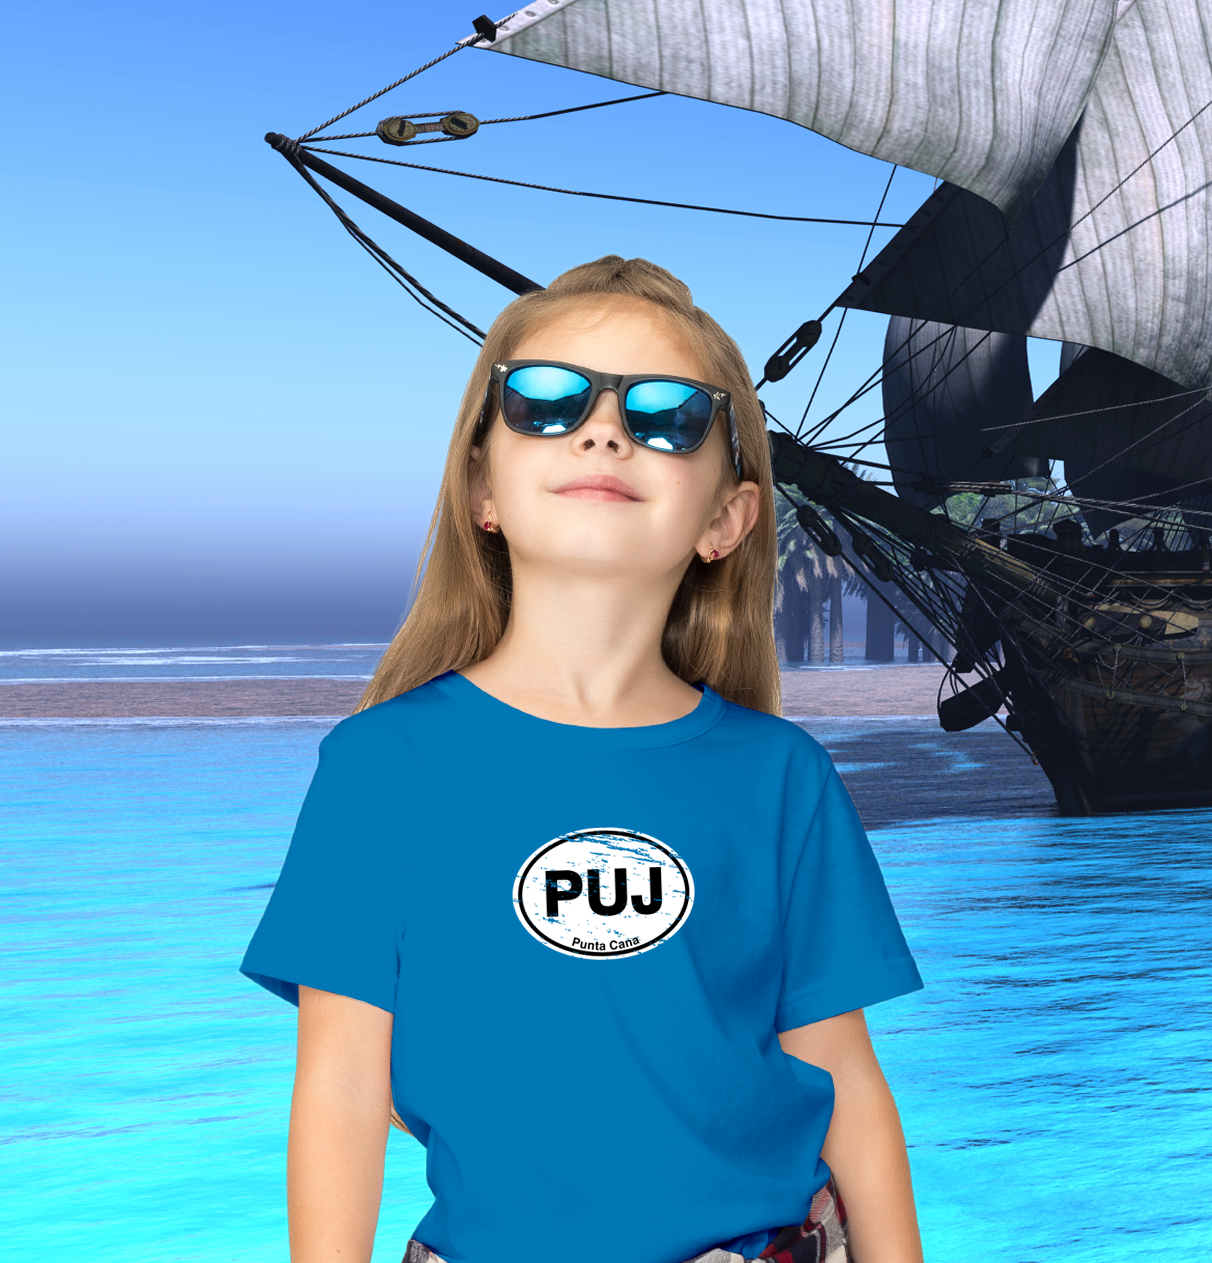 Punta Cana Classic Youth T-Shirt - My Destination Location